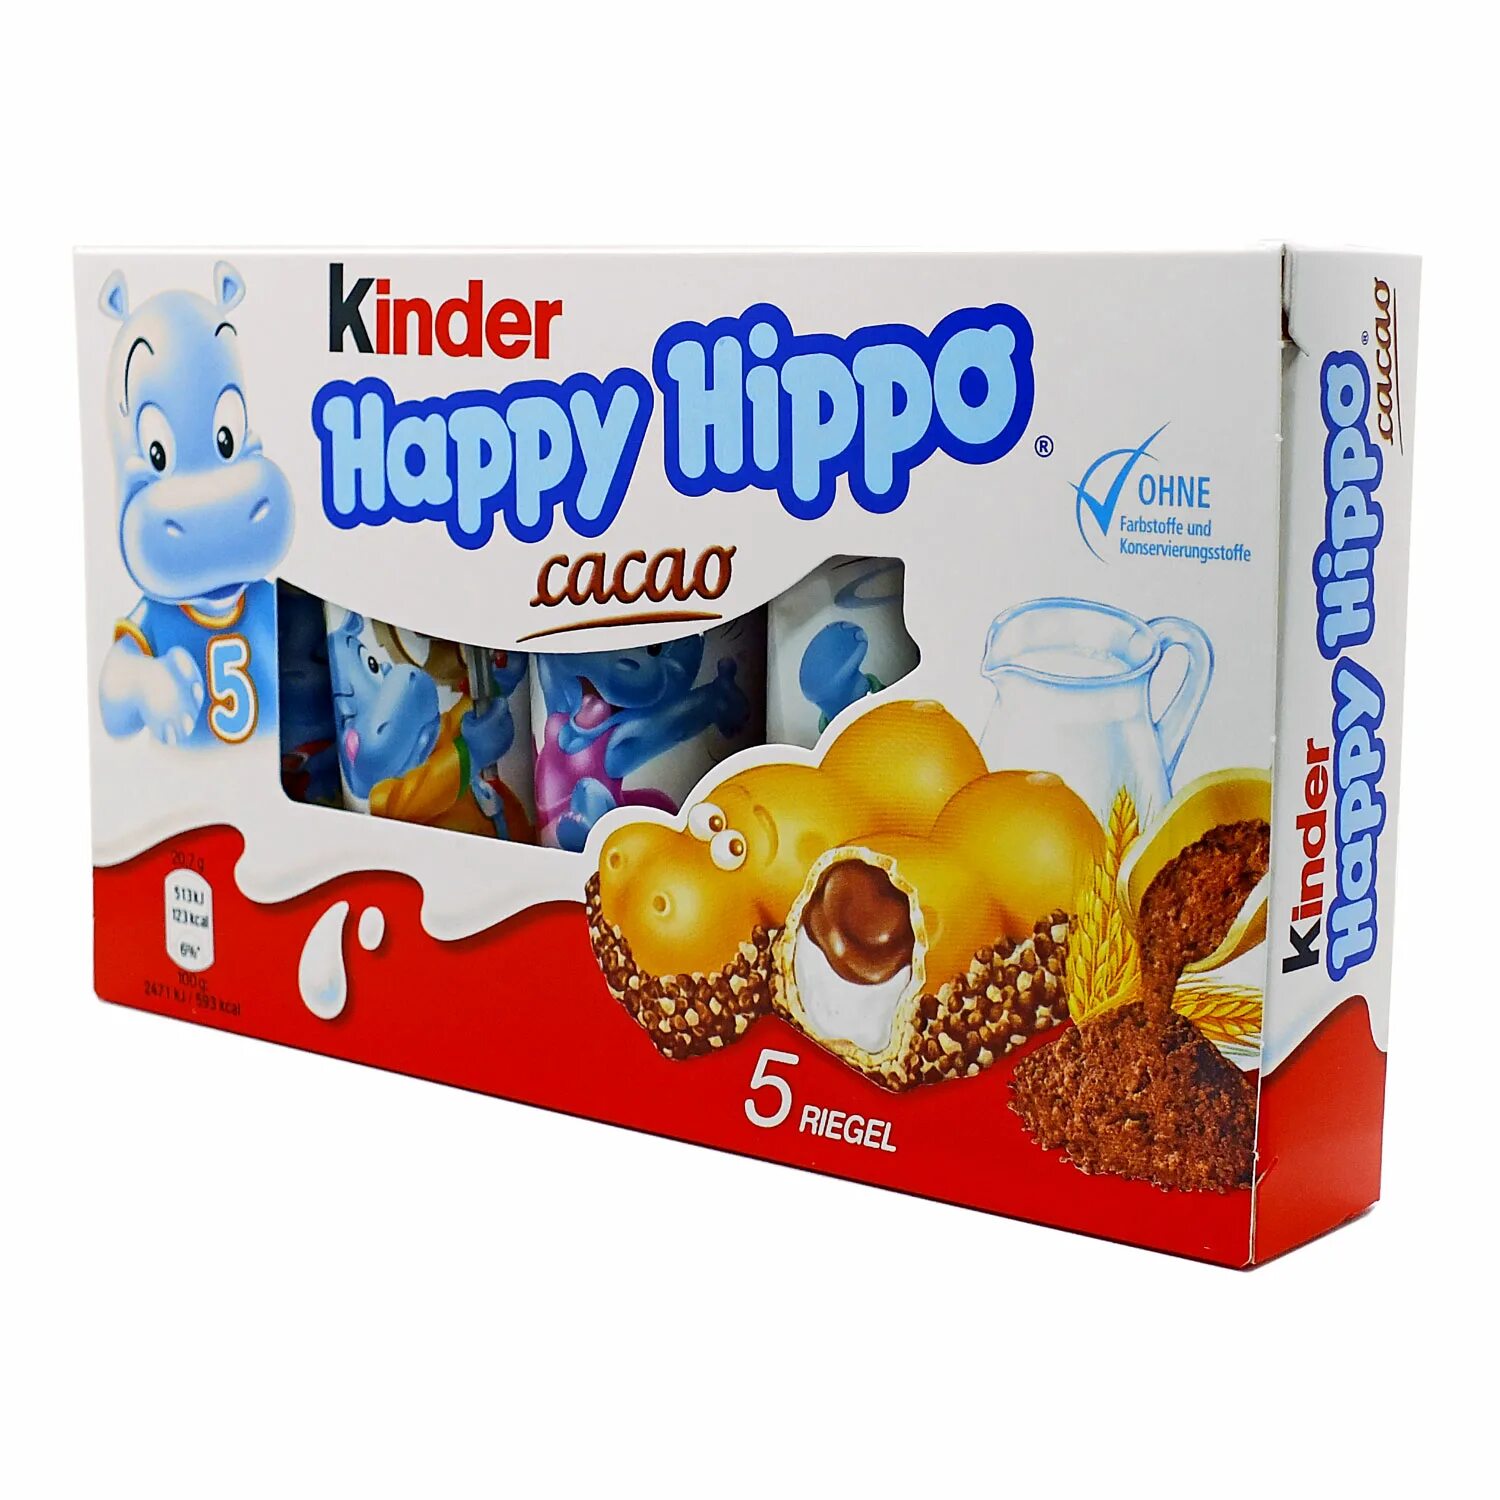 Киндер Хеппи Хиппо 104 гр.. Печенье kinder Happy Hippo. Хэппи Хиппо Киндер бегемотики. Бегемотик Киндер Happy Hippo.